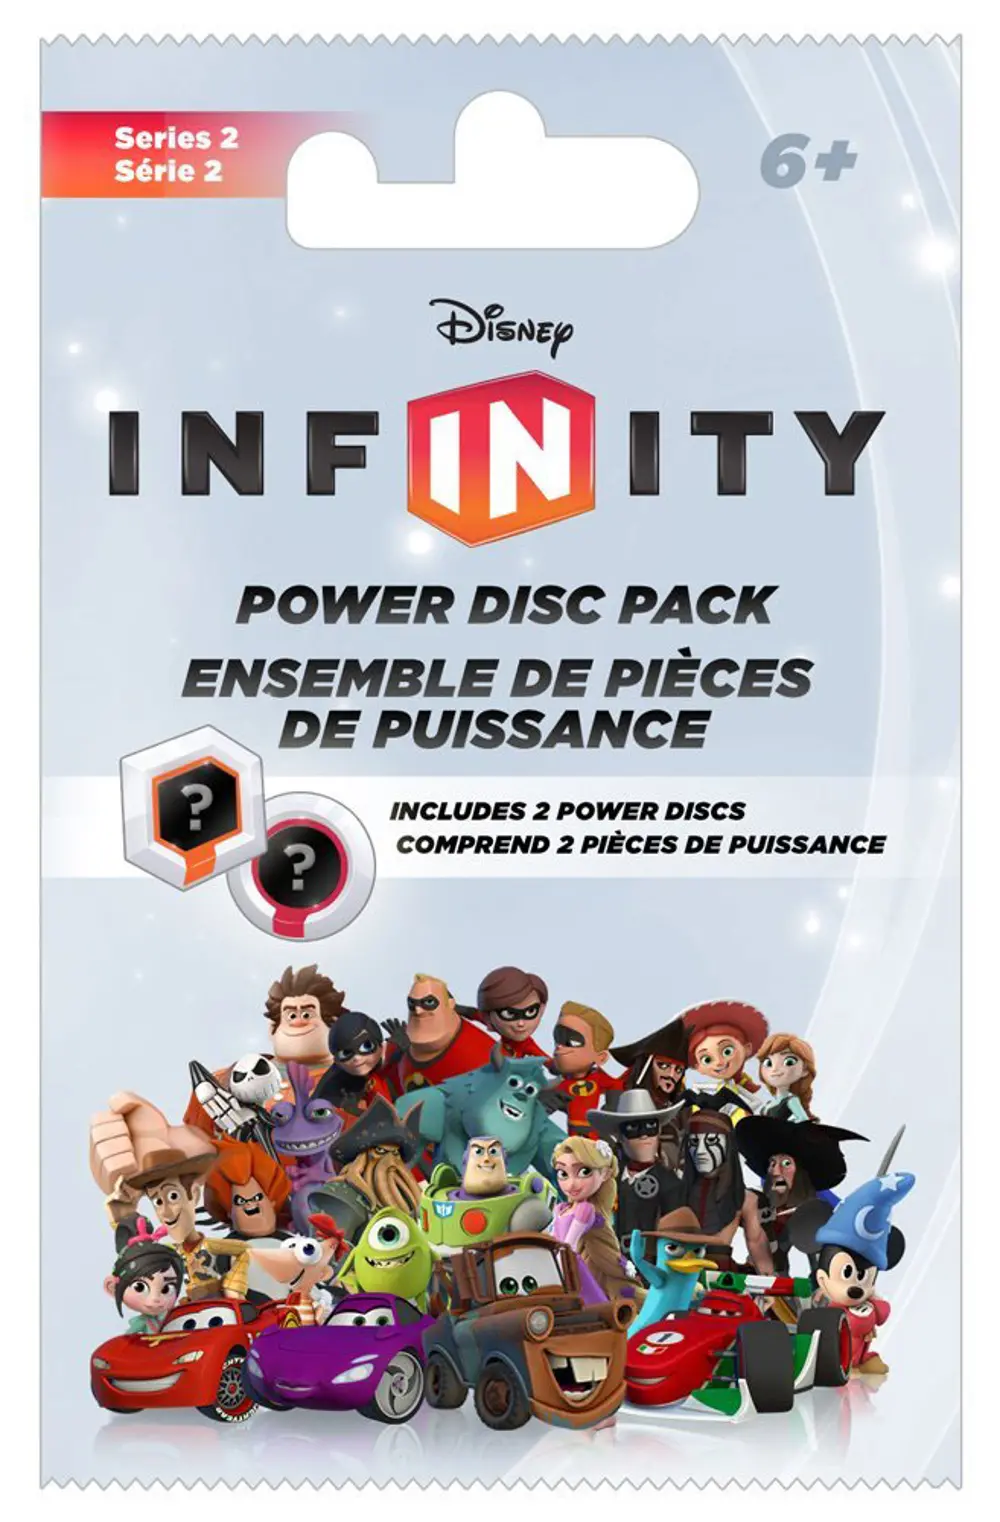 INFINITY-PWRDISC-S2 Disney INFINITY Power Disc Pack - Series 2-1